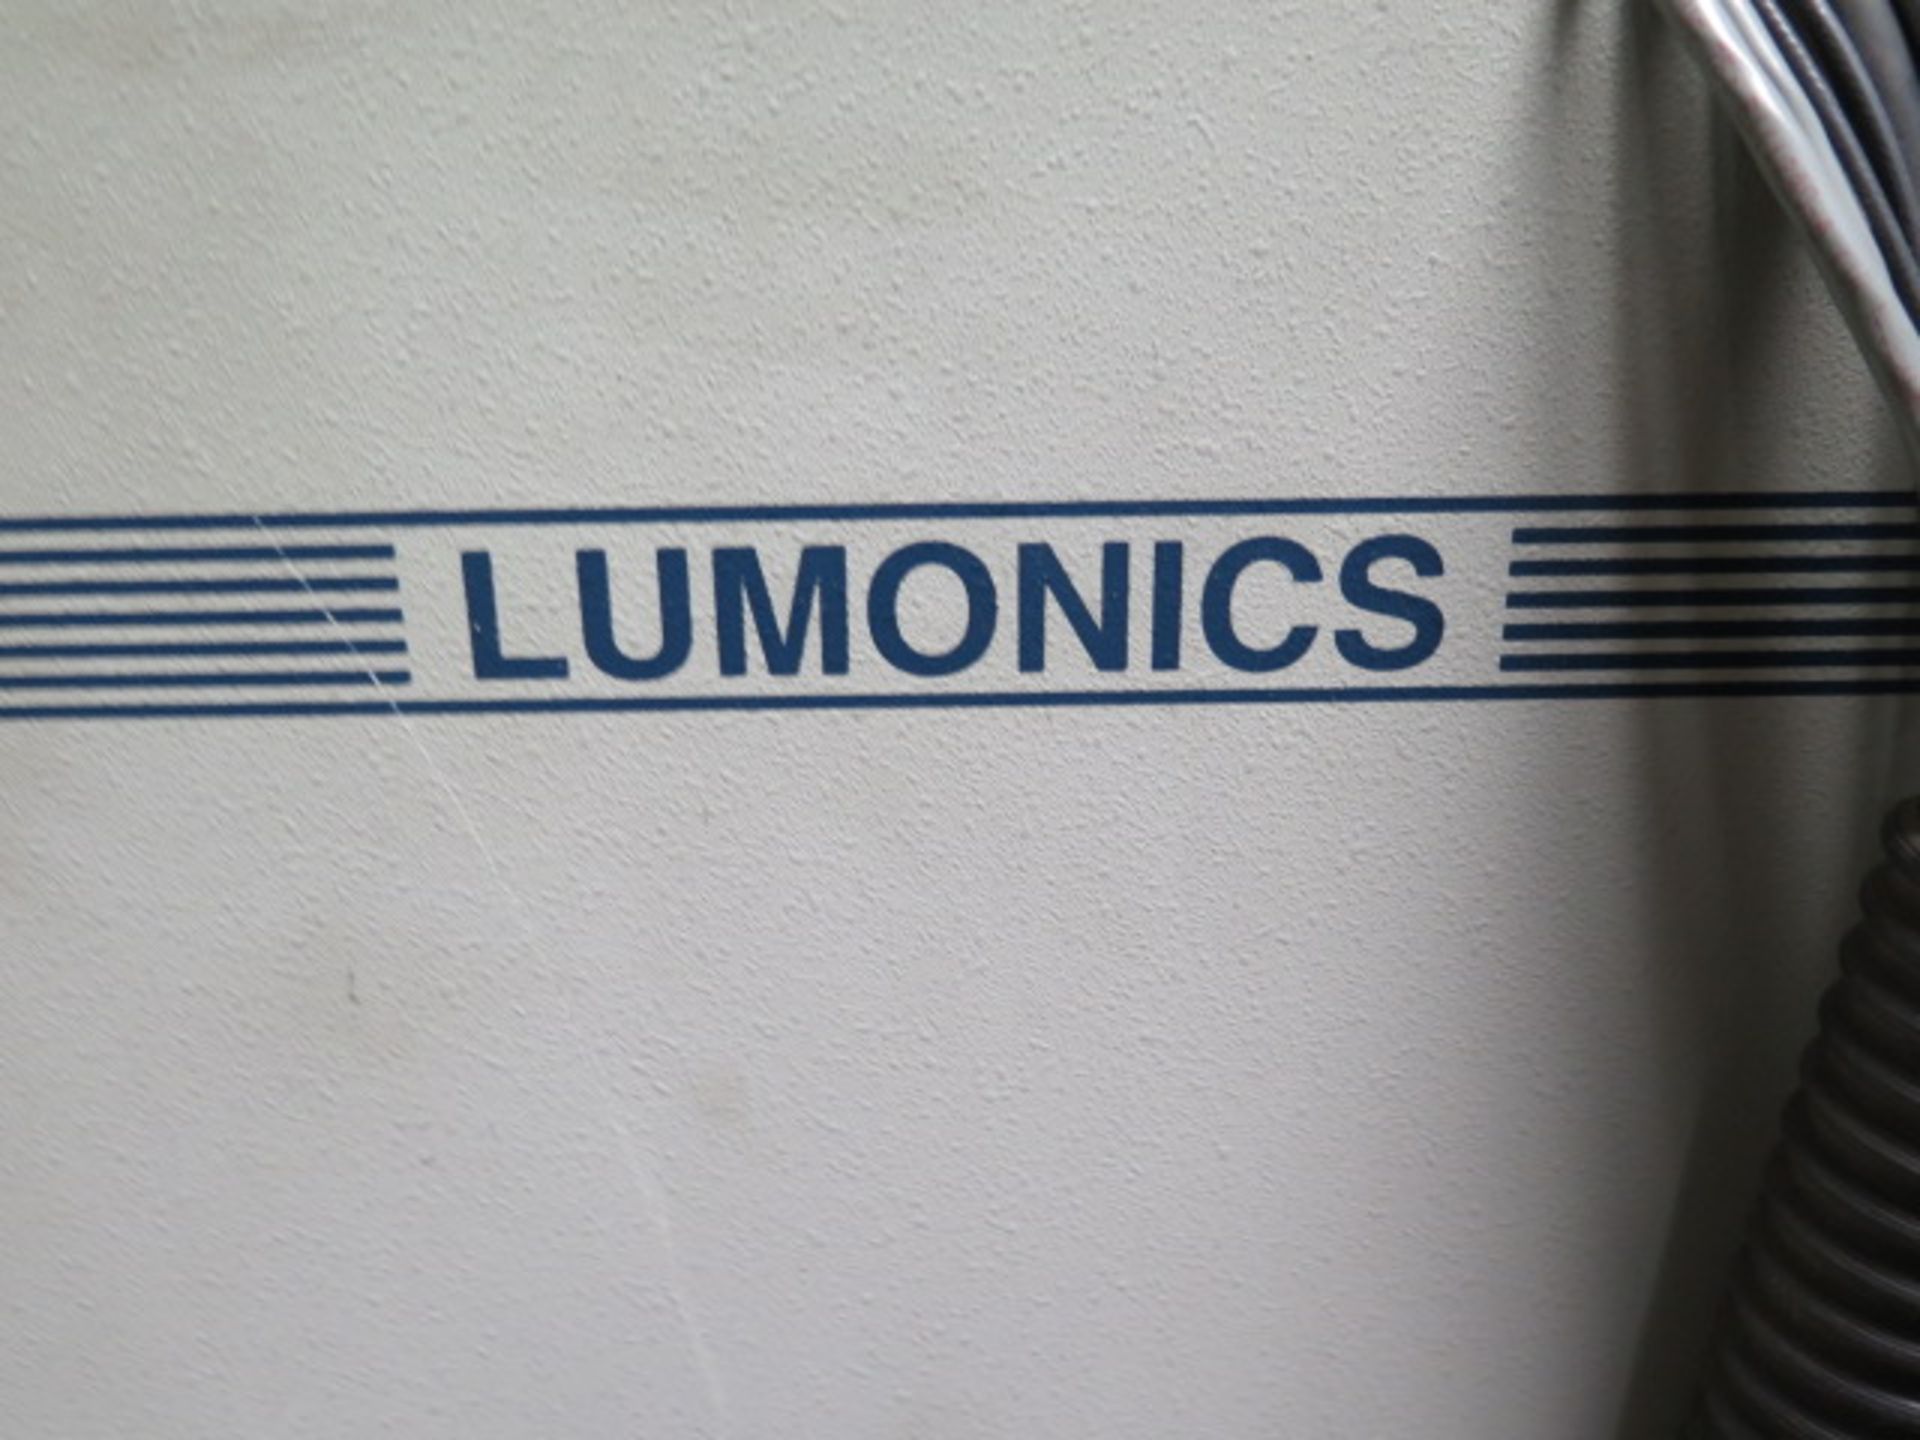 Lumonics "Light Writer Spe" Laser Engraving System w/ Lumonics Controls (SOLD AS-IS - NO WARRANTY) - Image 3 of 8